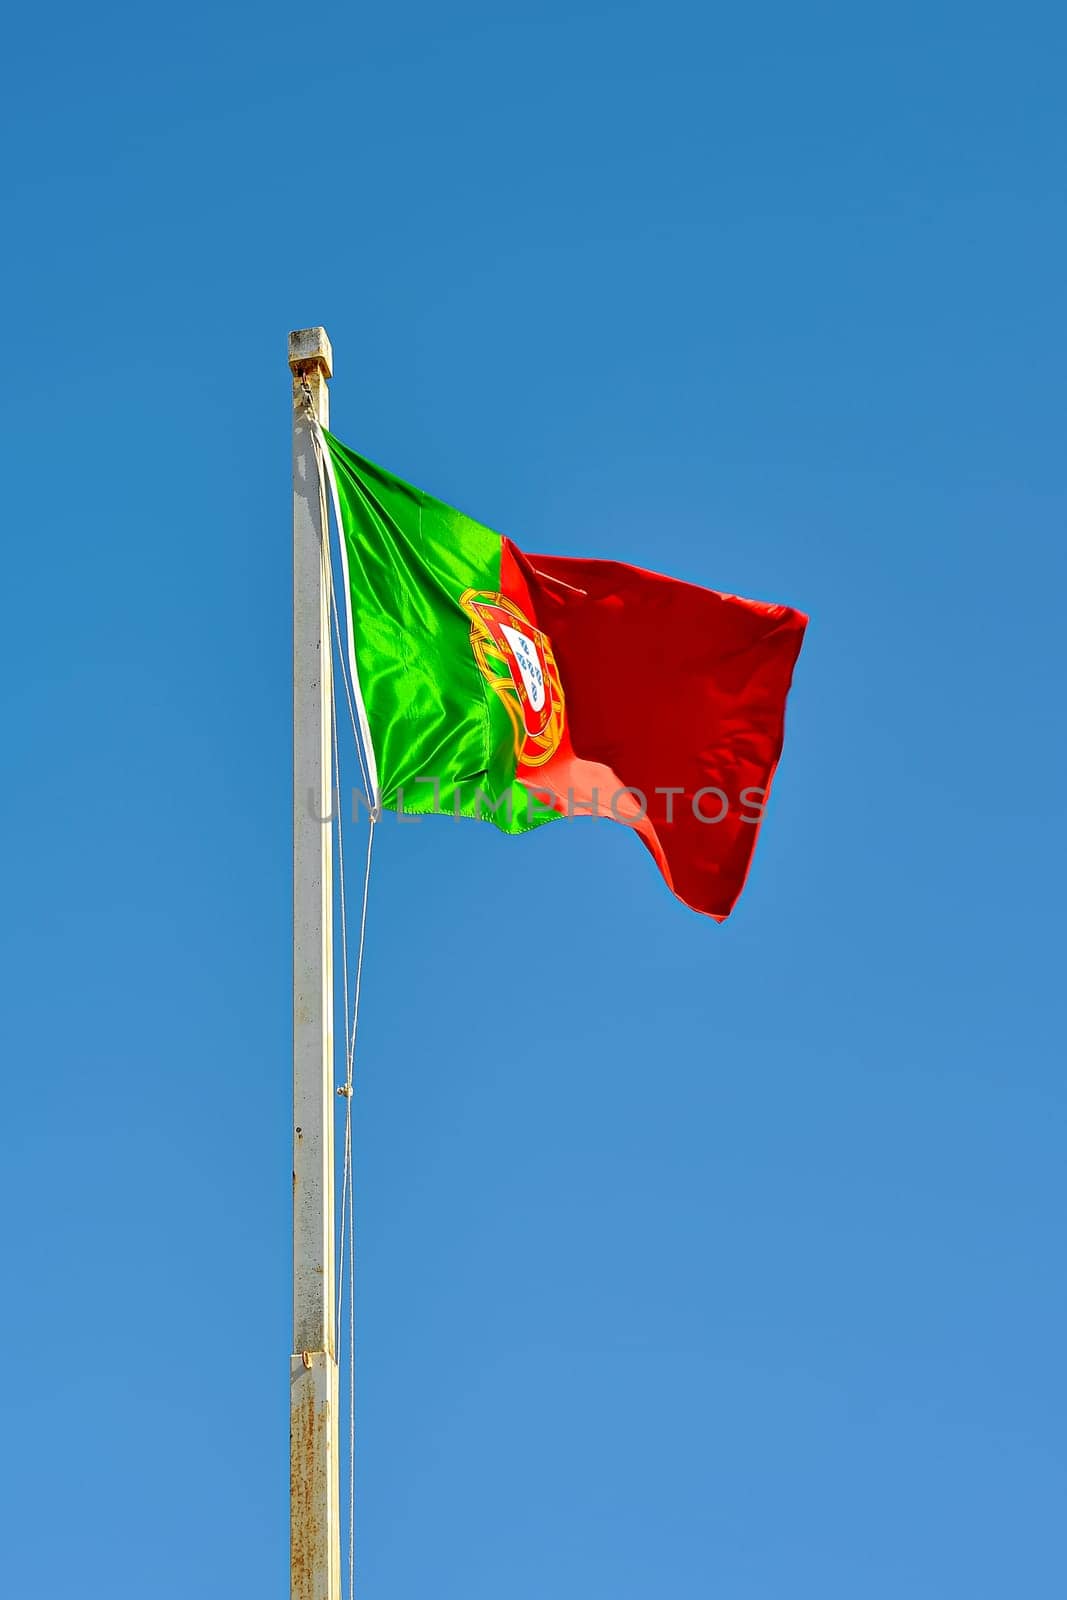 Portuguese flag waving in the wind against blue sky. Portuguese Flag Waving Against Blue Sky. Flag of Portugal waving, against blue sky vertical banner by esvetleishaya